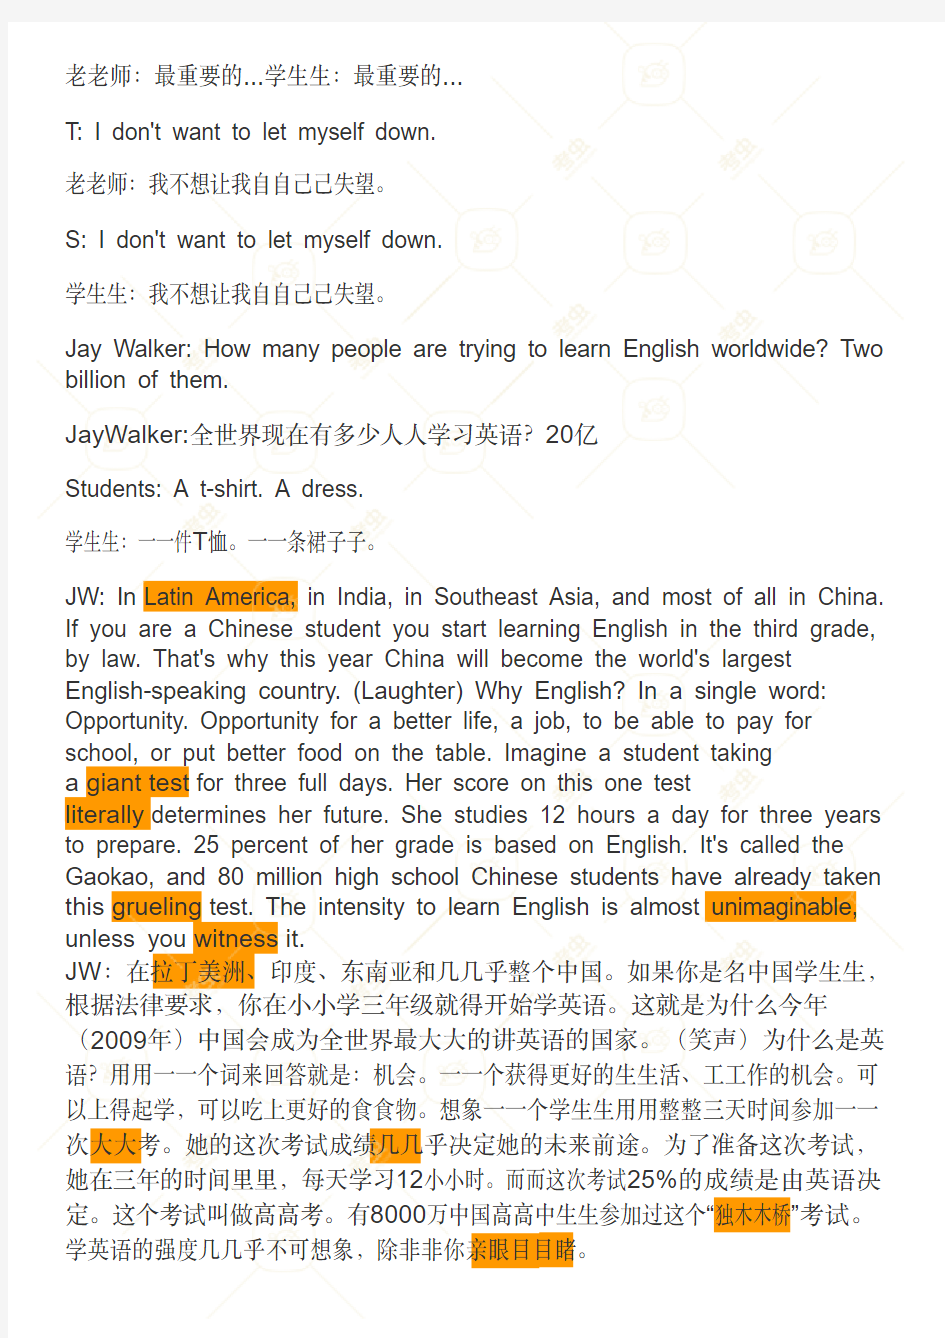 TED演讲：Jay_Walker谈中国英语学习狂热